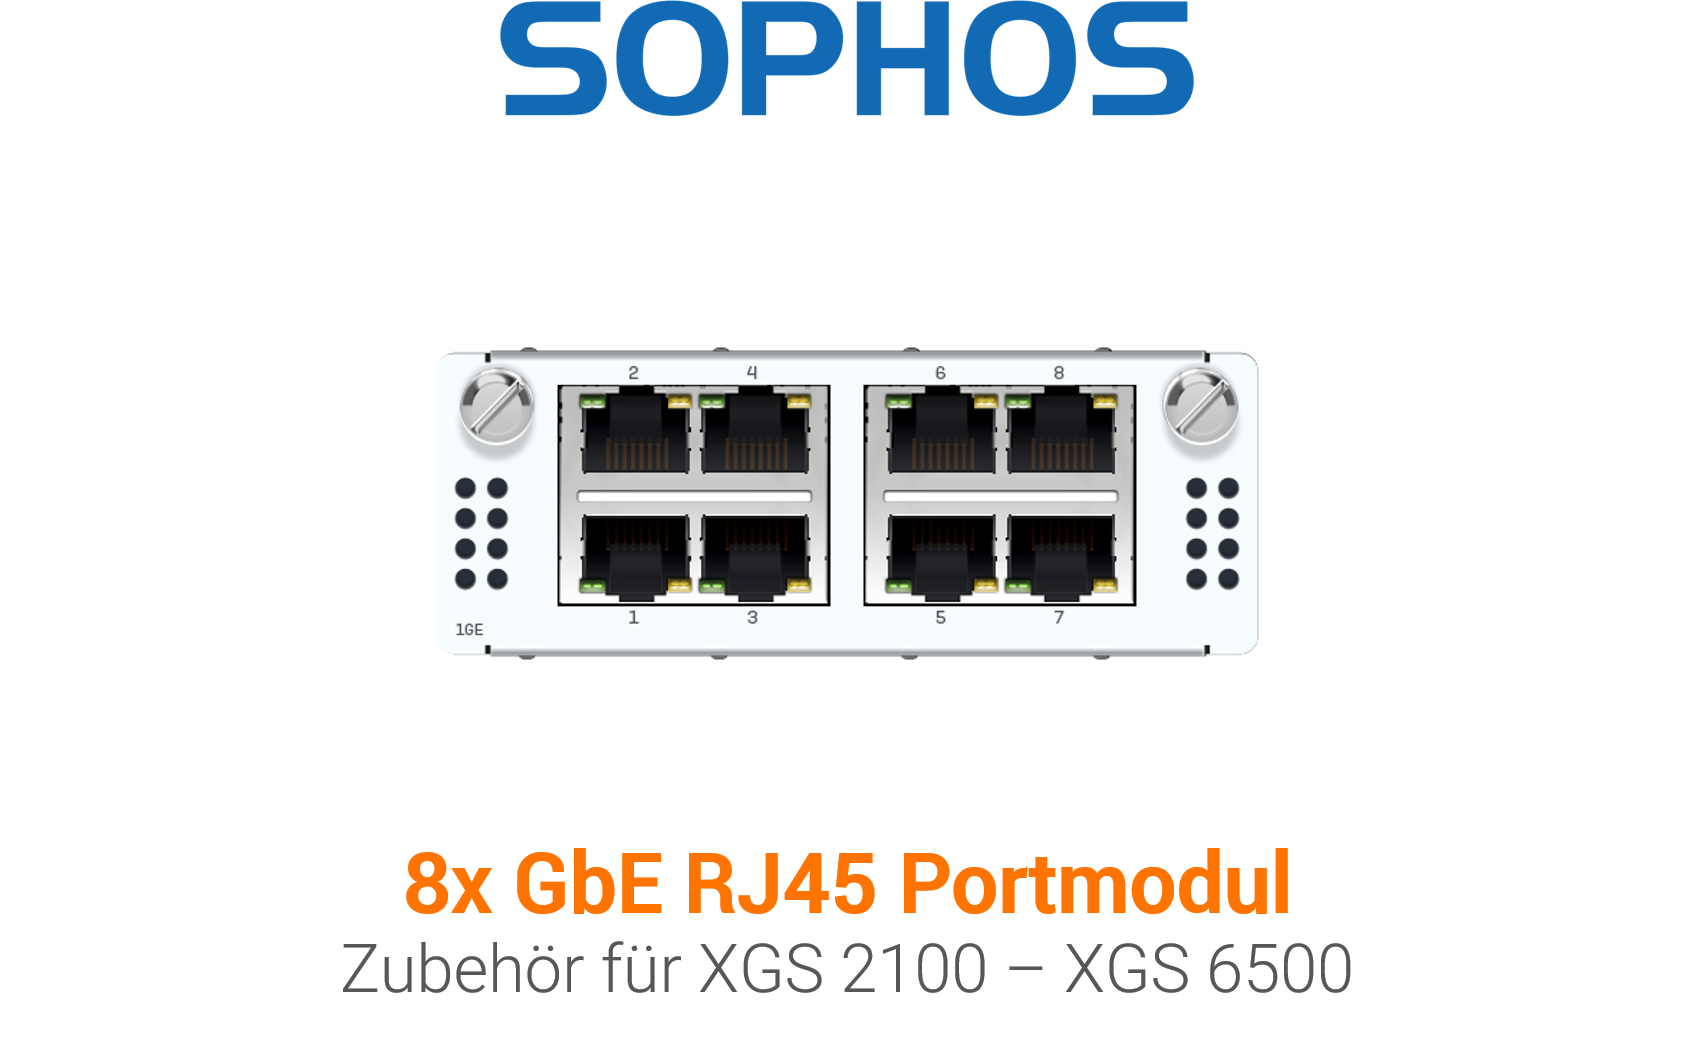 Sophos 8x GbE RJ45 Portmodul